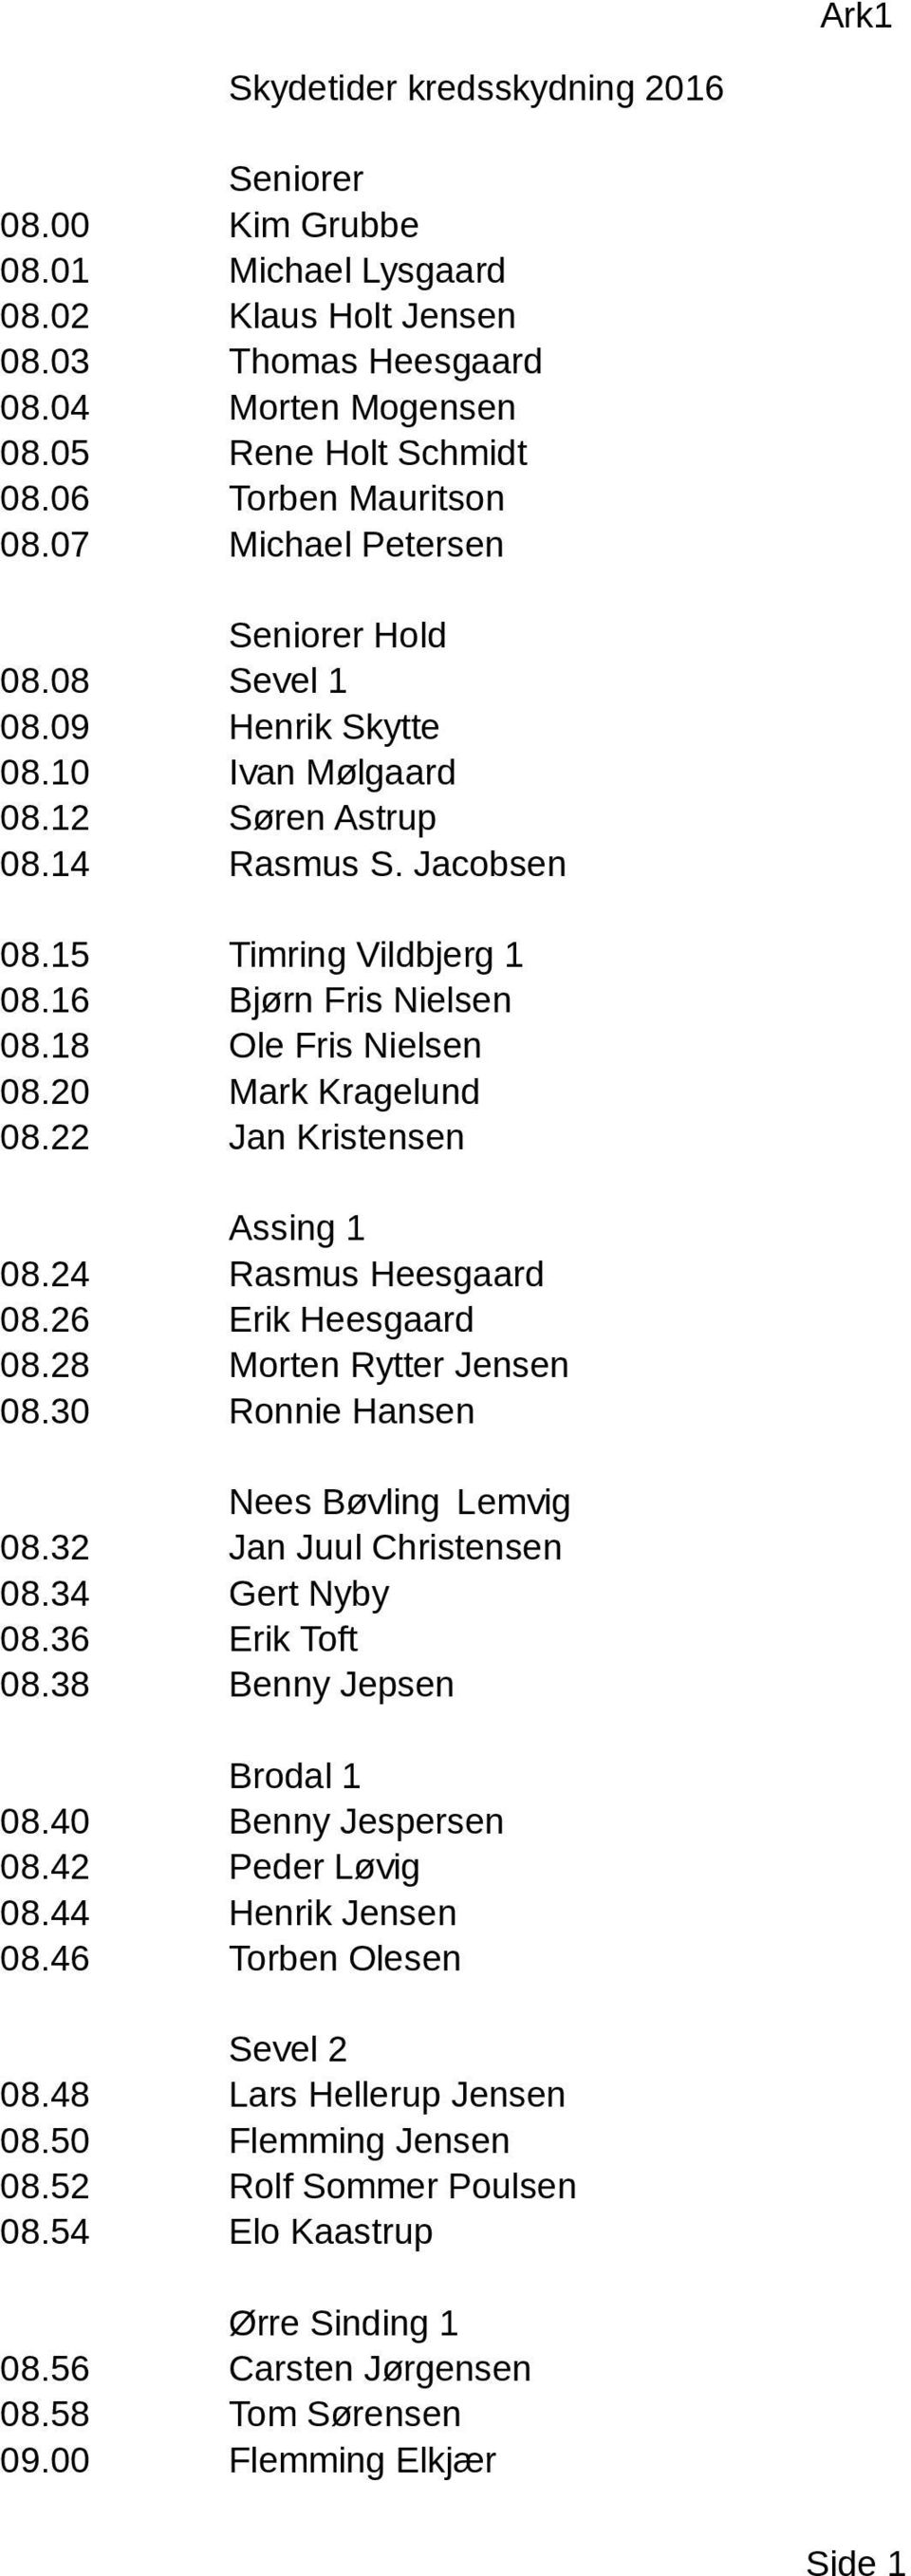 18 Ole Fris Nielsen 08.20 Mark Kragelund 08.22 Jan Kristensen Assing 1 08.24 Rasmus Heesgaard 08.26 Erik Heesgaard 08.28 Morten Rytter Jensen 08.30 Ronnie Hansen Nees Bøvling Lemvig 08.